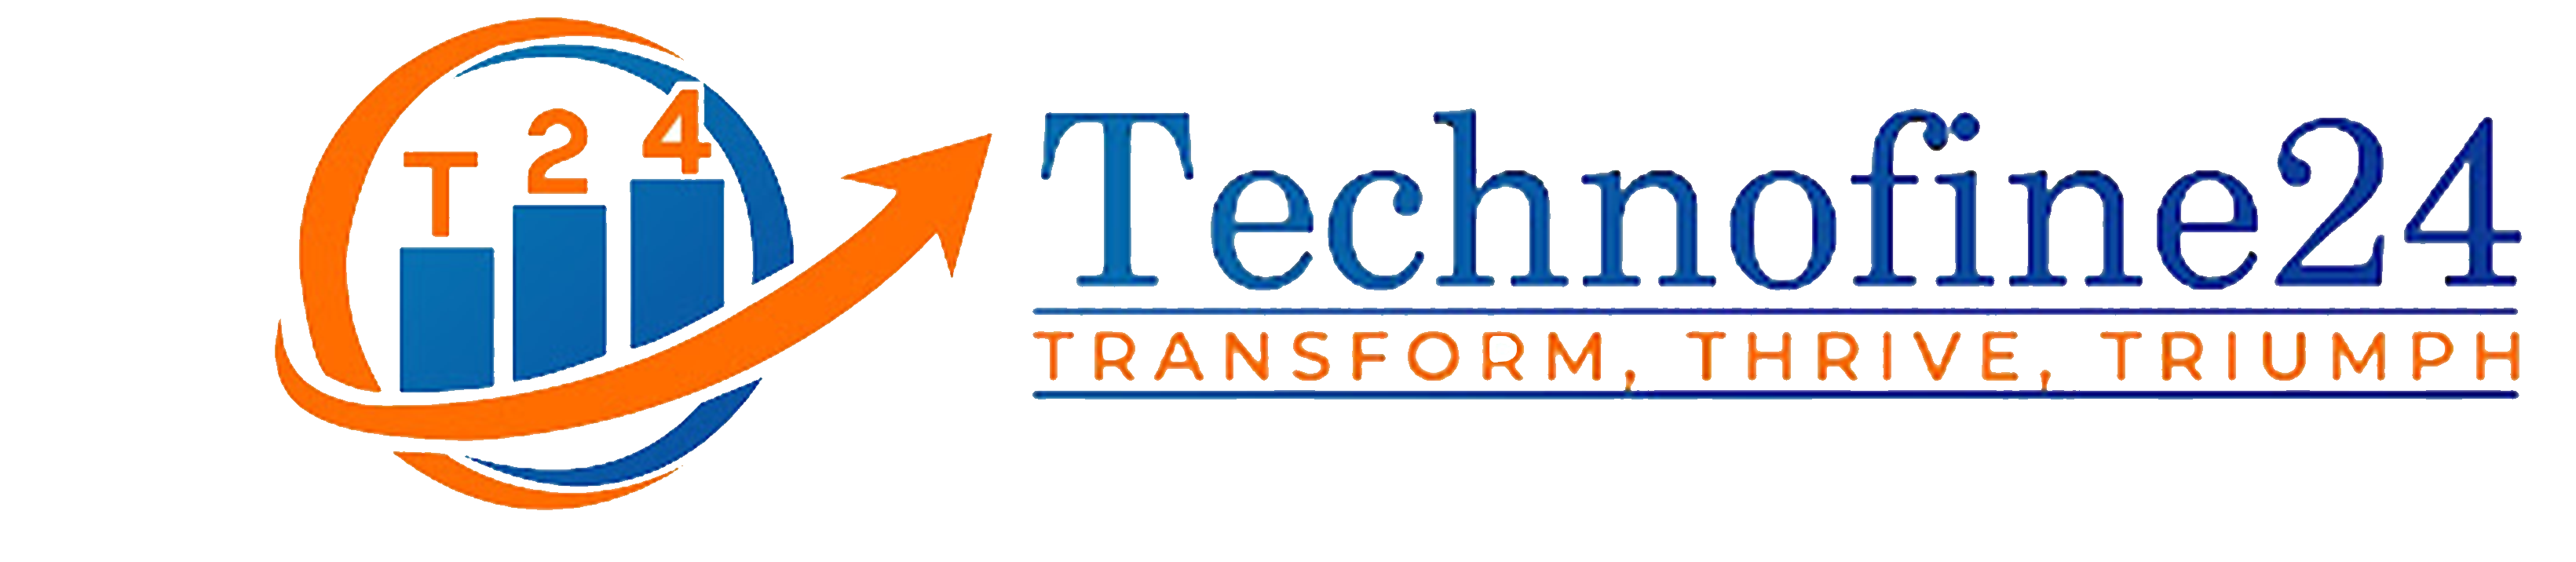 Welcome to Technofine24.com